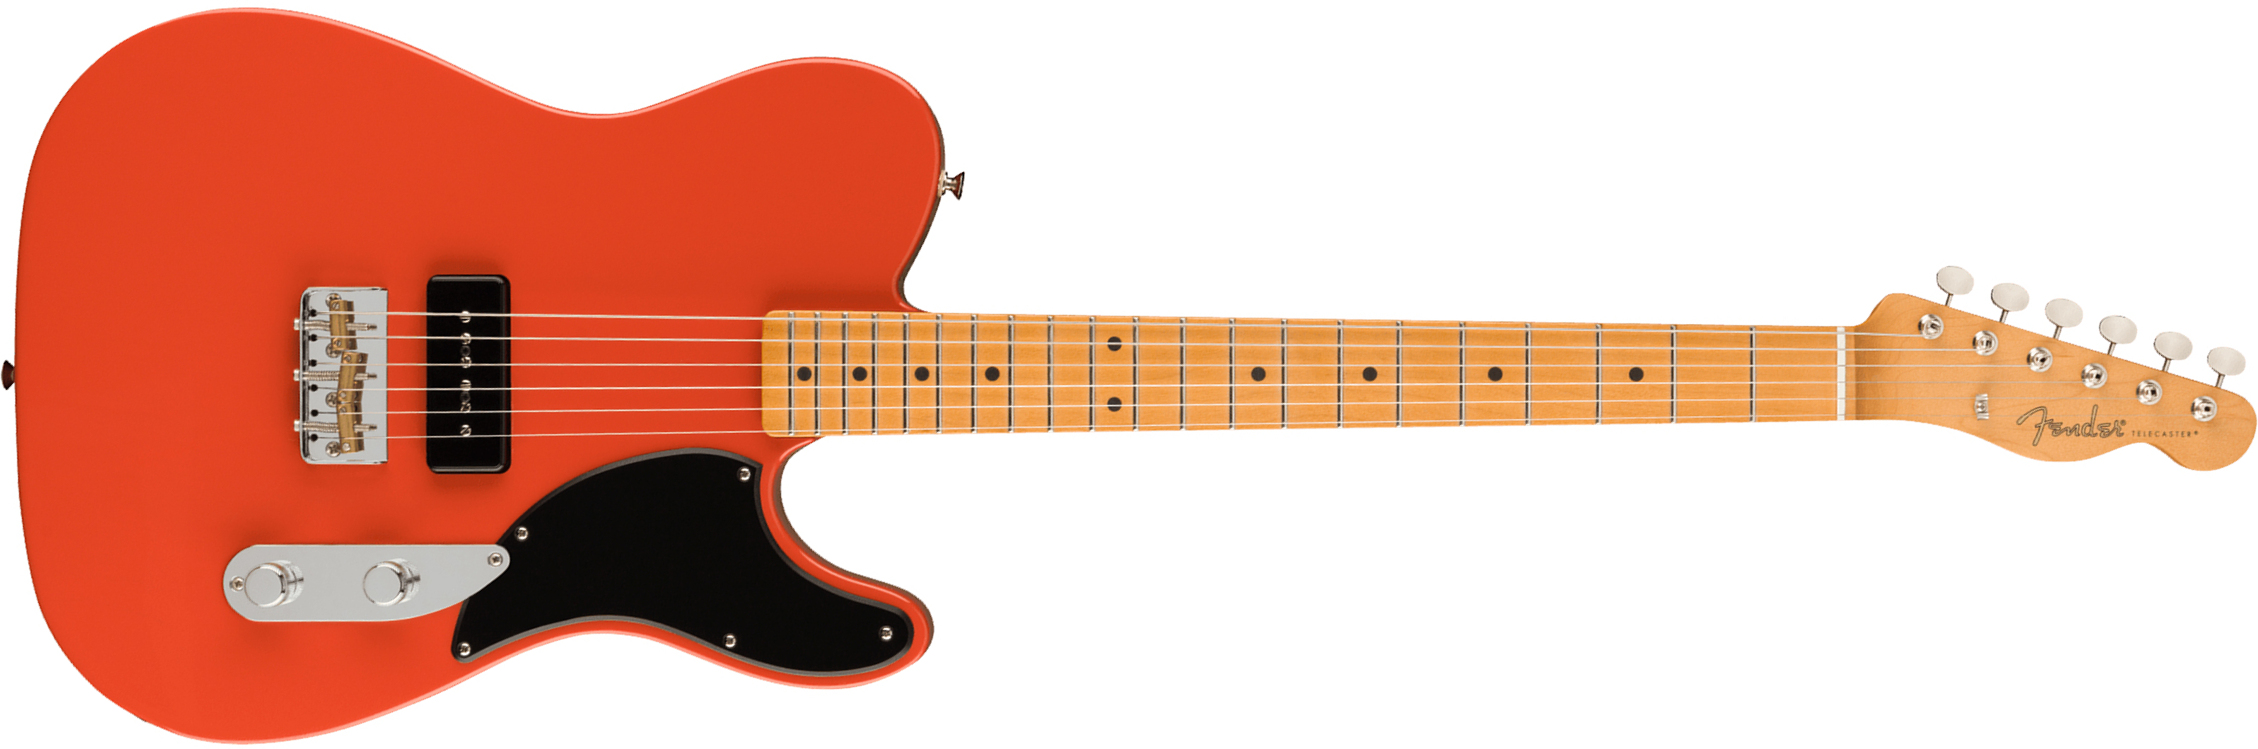 Fender Tele Noventa Mex Mn +housse - Fiesta Red - Televorm elektrische gitaar - Main picture